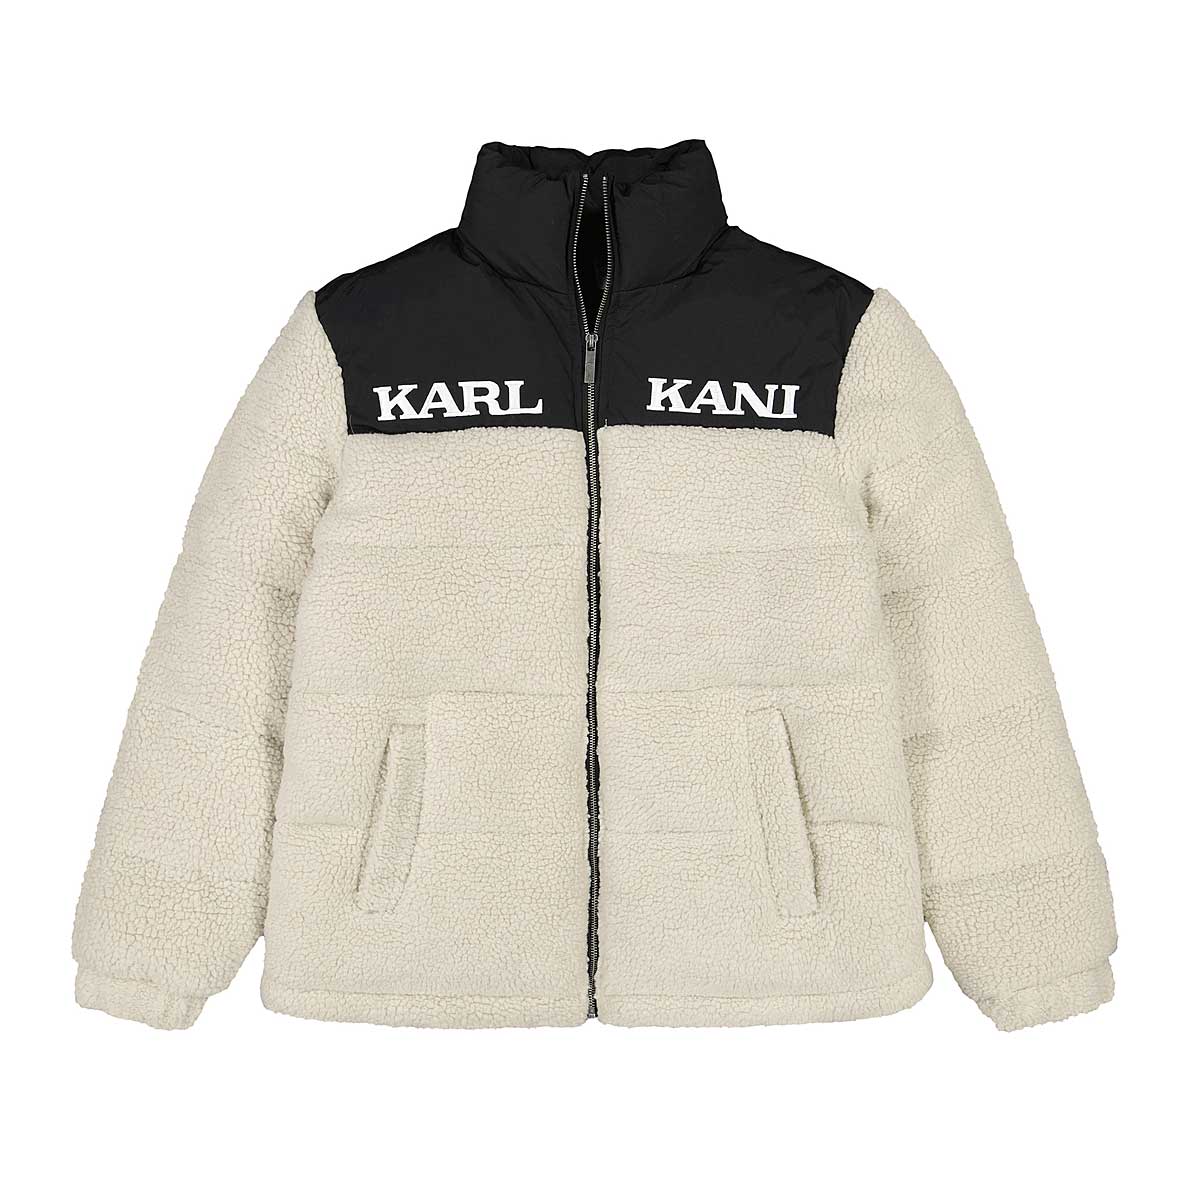 Karl Kani Retro Reversible Teddy Puffer Jacket, Black/White/Sand